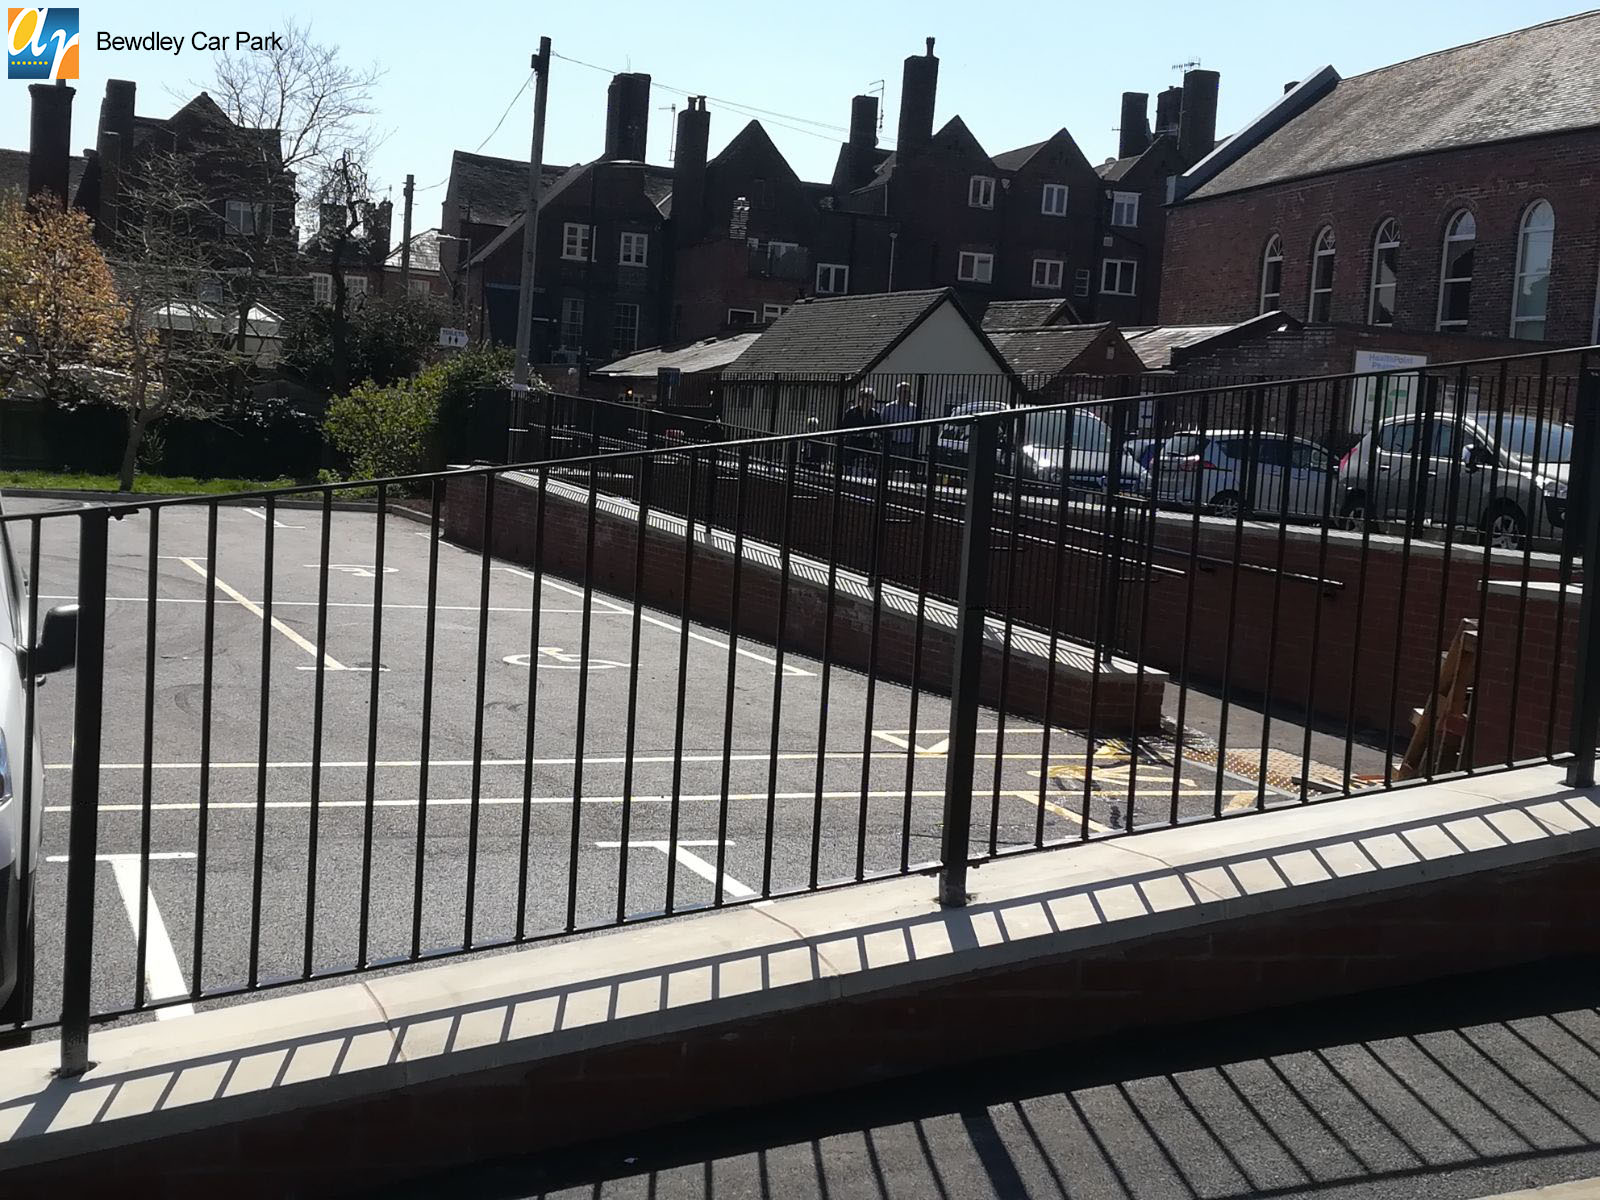 Bewdley Car Park Flat Top metal railings